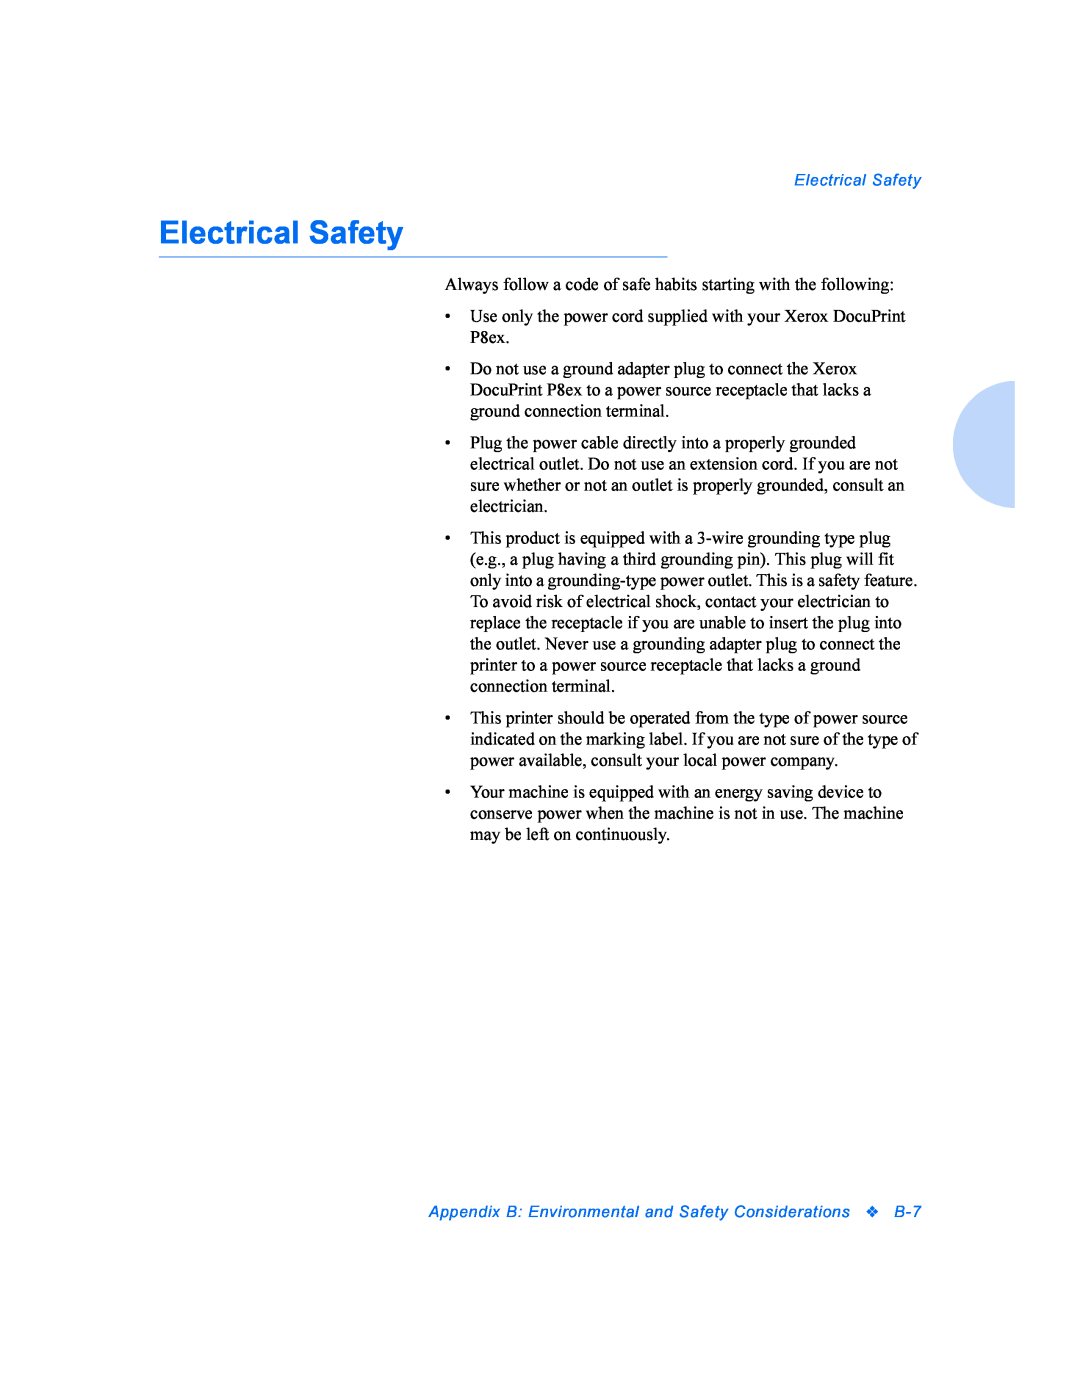 Xerox DocuPrint P8ex manual Electrical Safety 